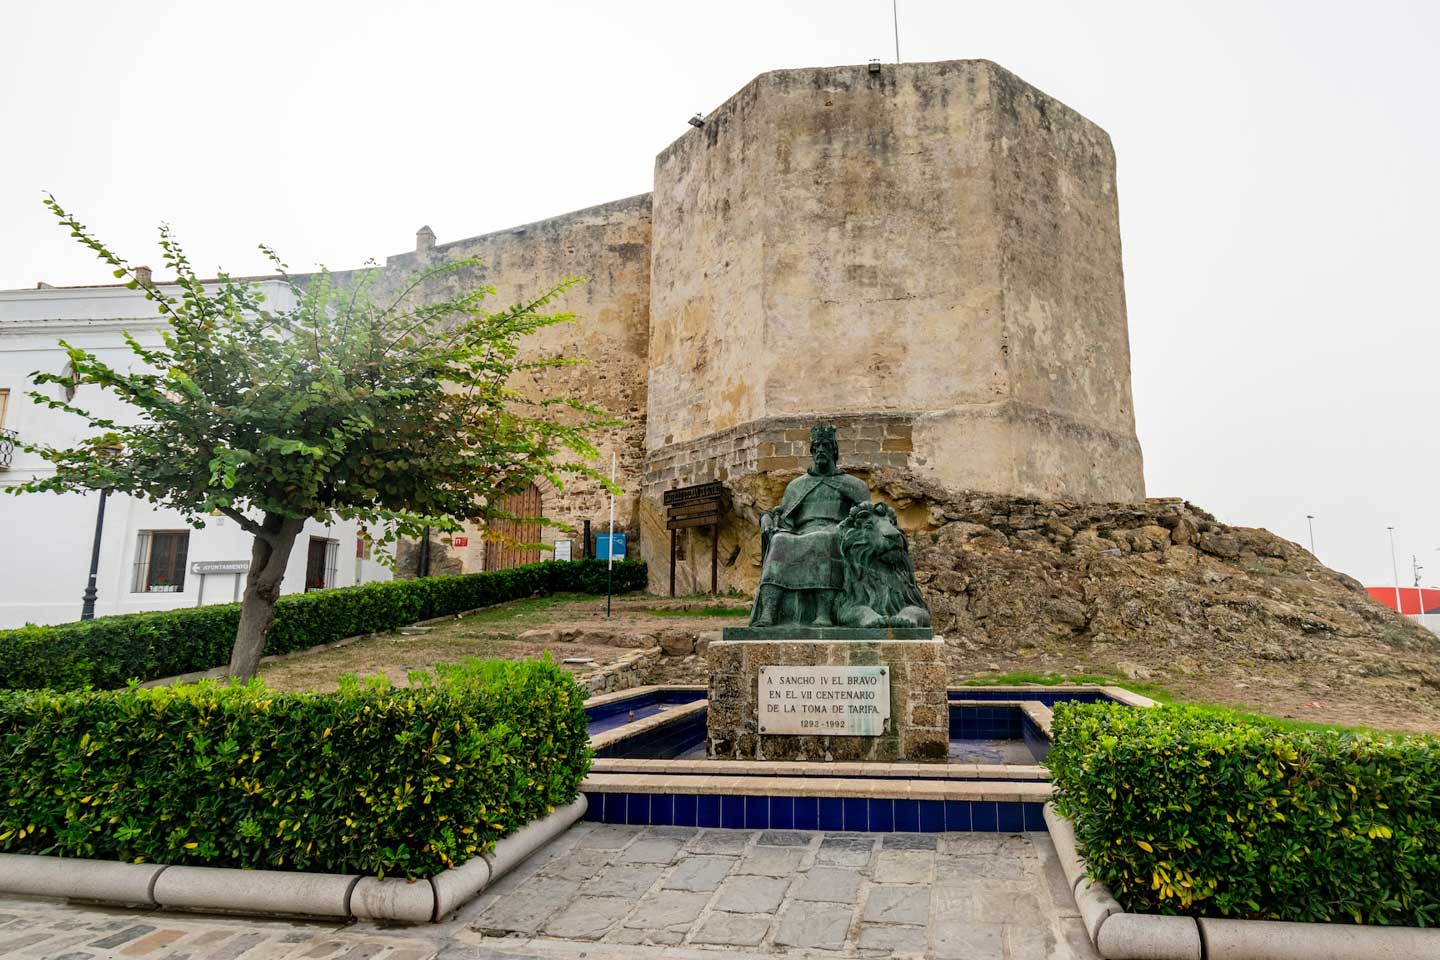 Monument in Tarifa, Spain